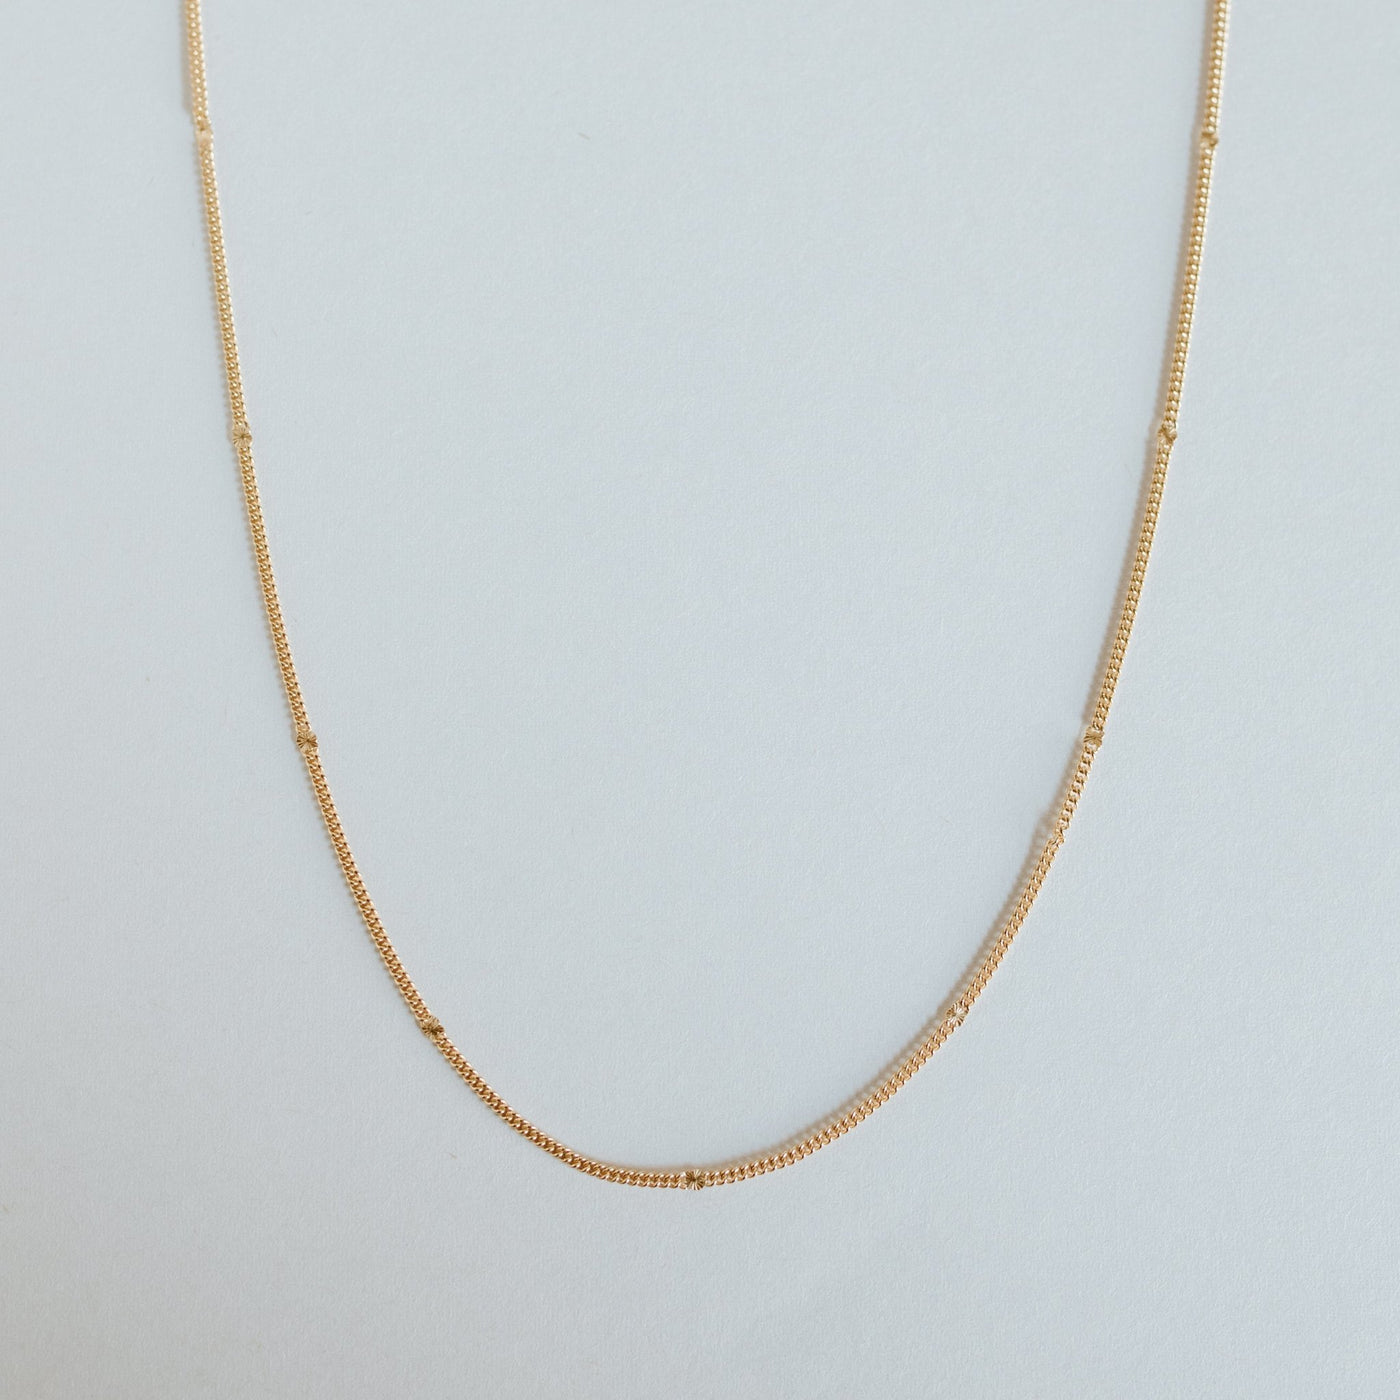 Marbella Necklace - Jillian Leigh Jewellery - necklaces